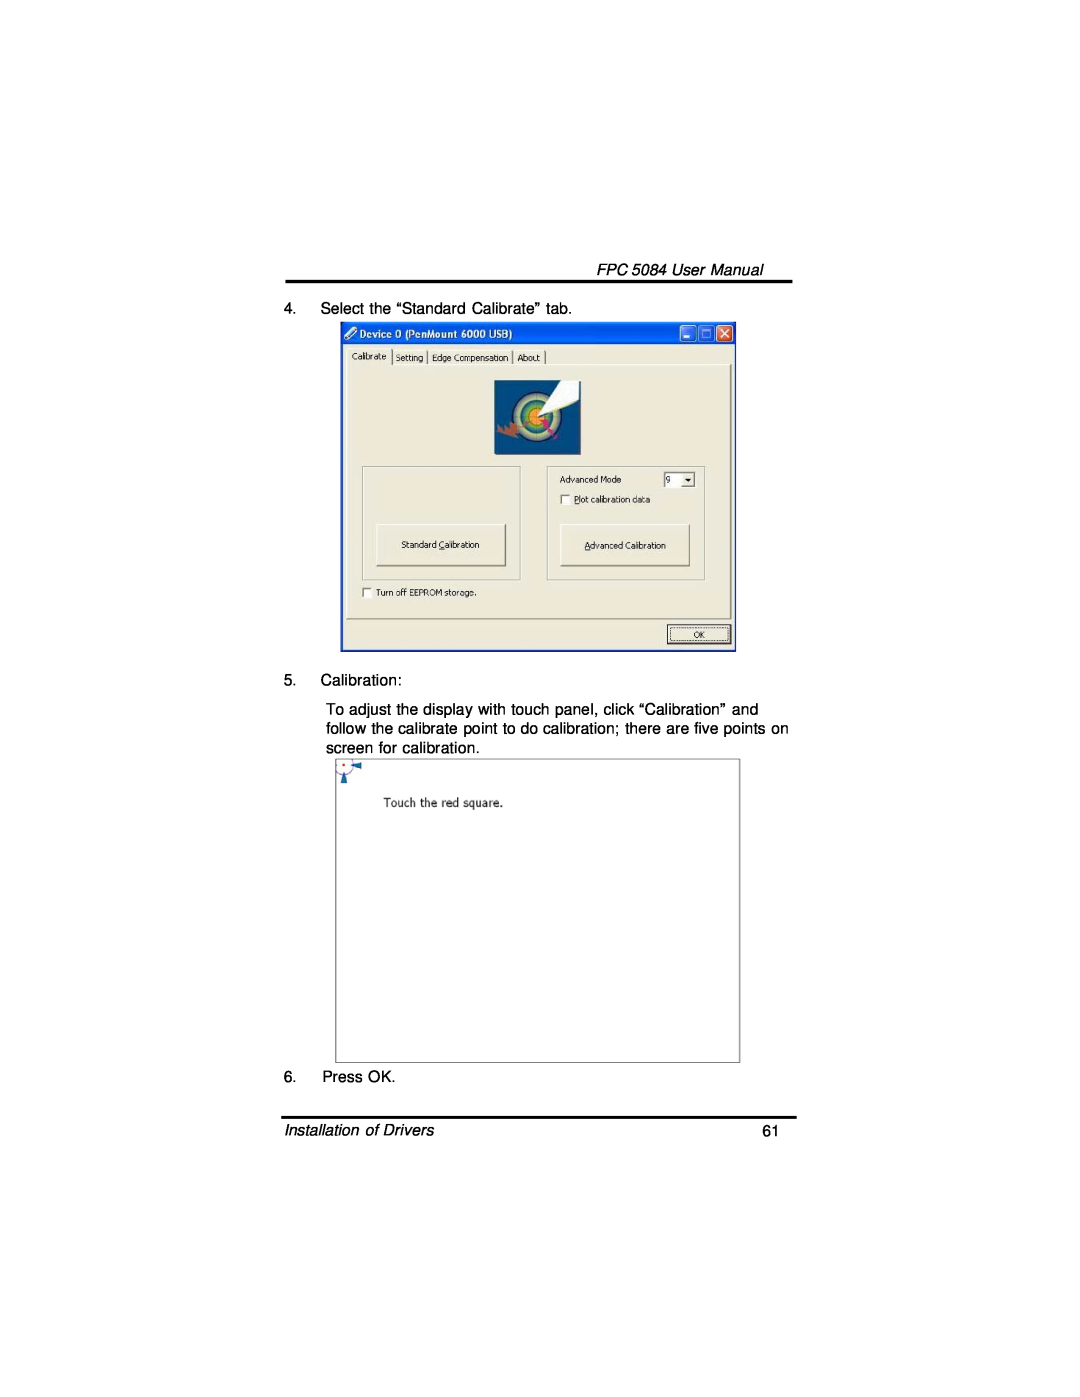 Intel N270 FPC 5084 User Manual, Select the “Standard Calibrate” tab 5. Calibration, Press OK, Installation of Drivers 